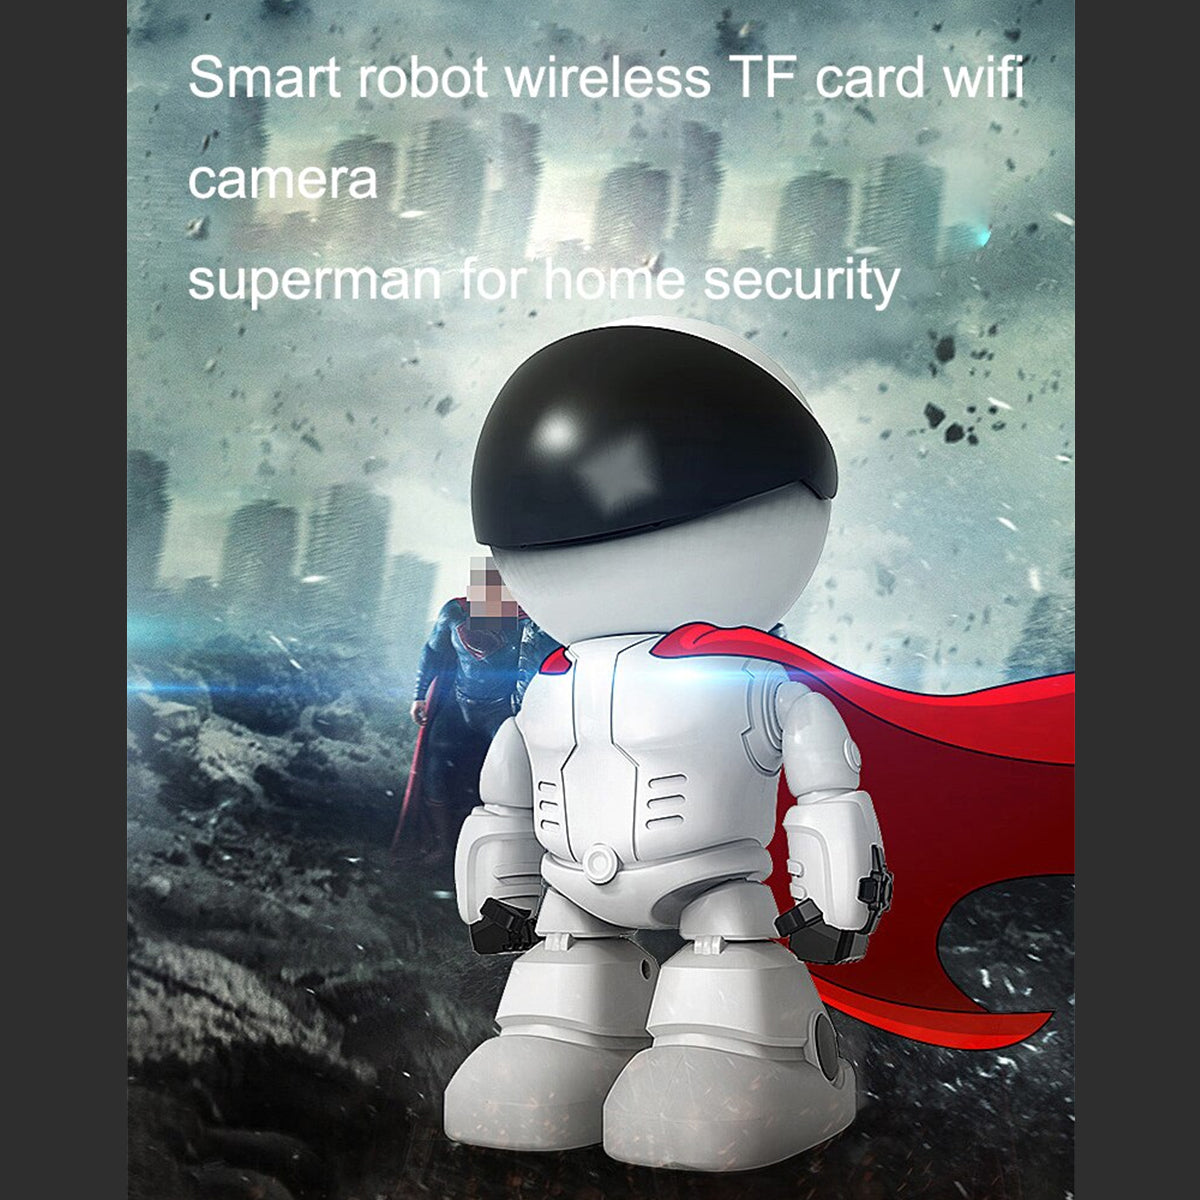 Cámara Wifi Ip Full Hd 1080p Fralugio Figura Robot Para Niño